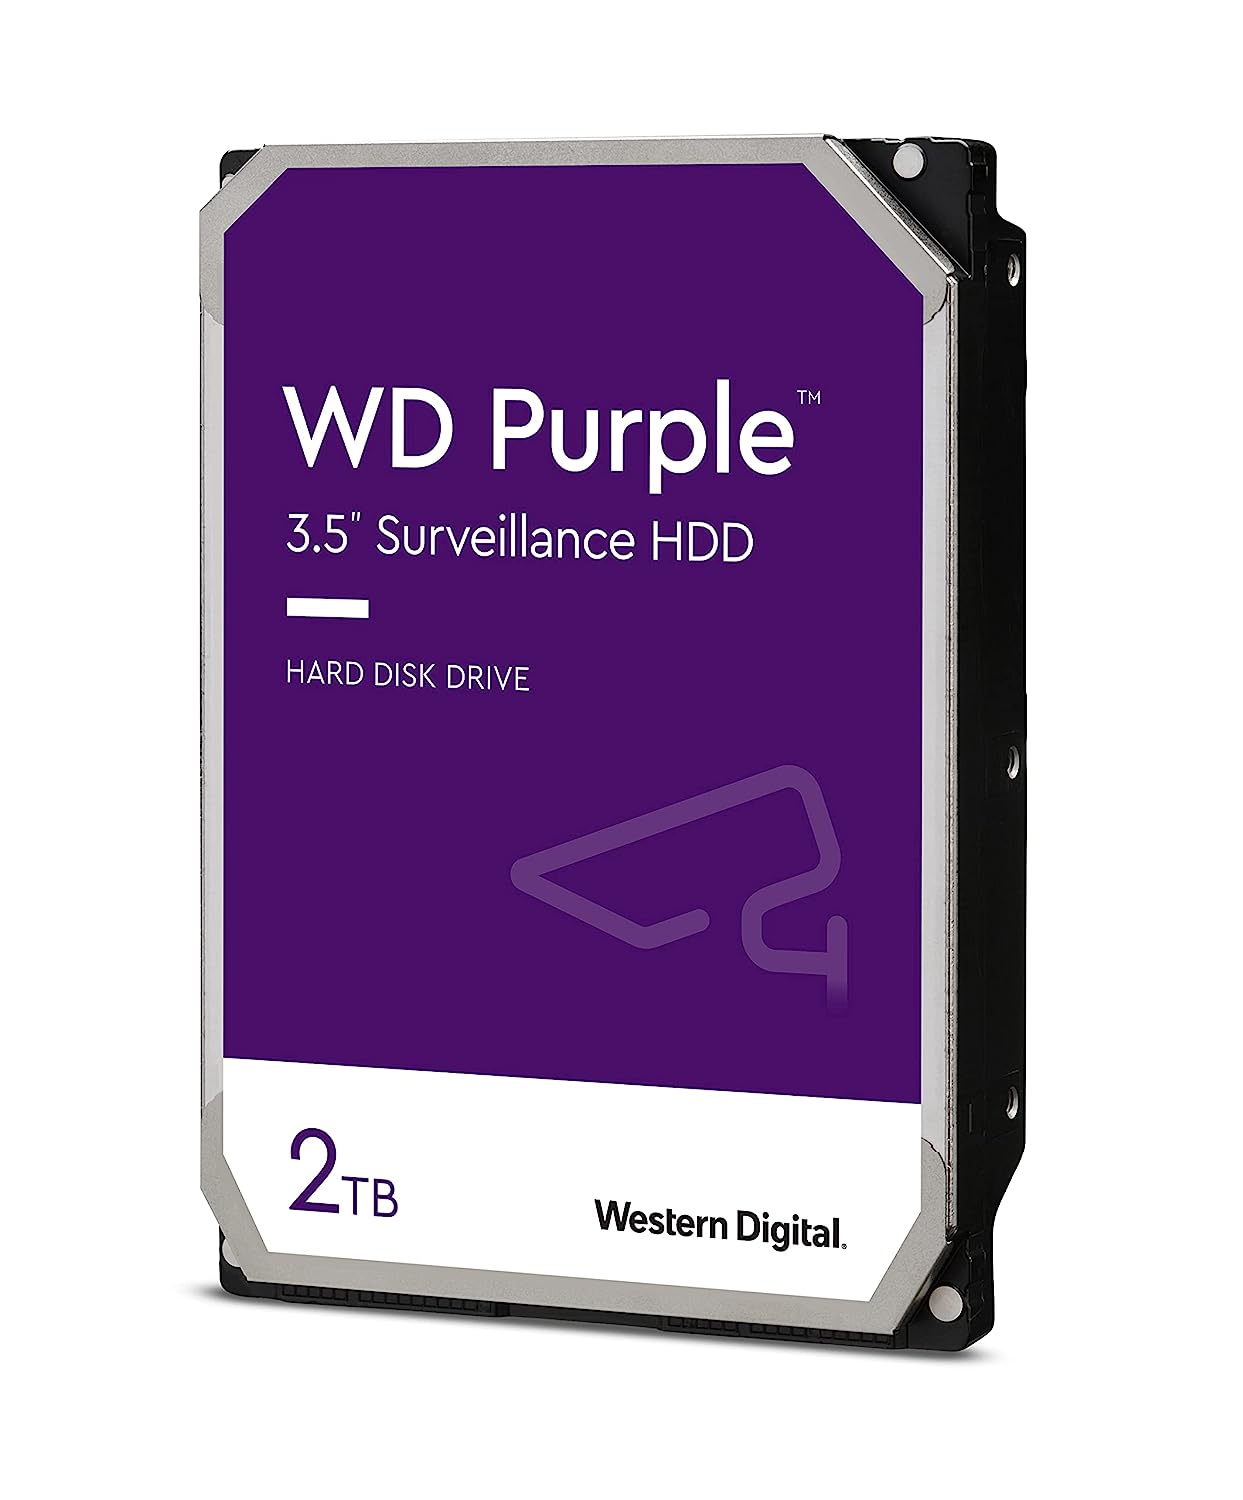 HDD Western Digital WD Purple 2TB SATA Internal Surveillance Hard